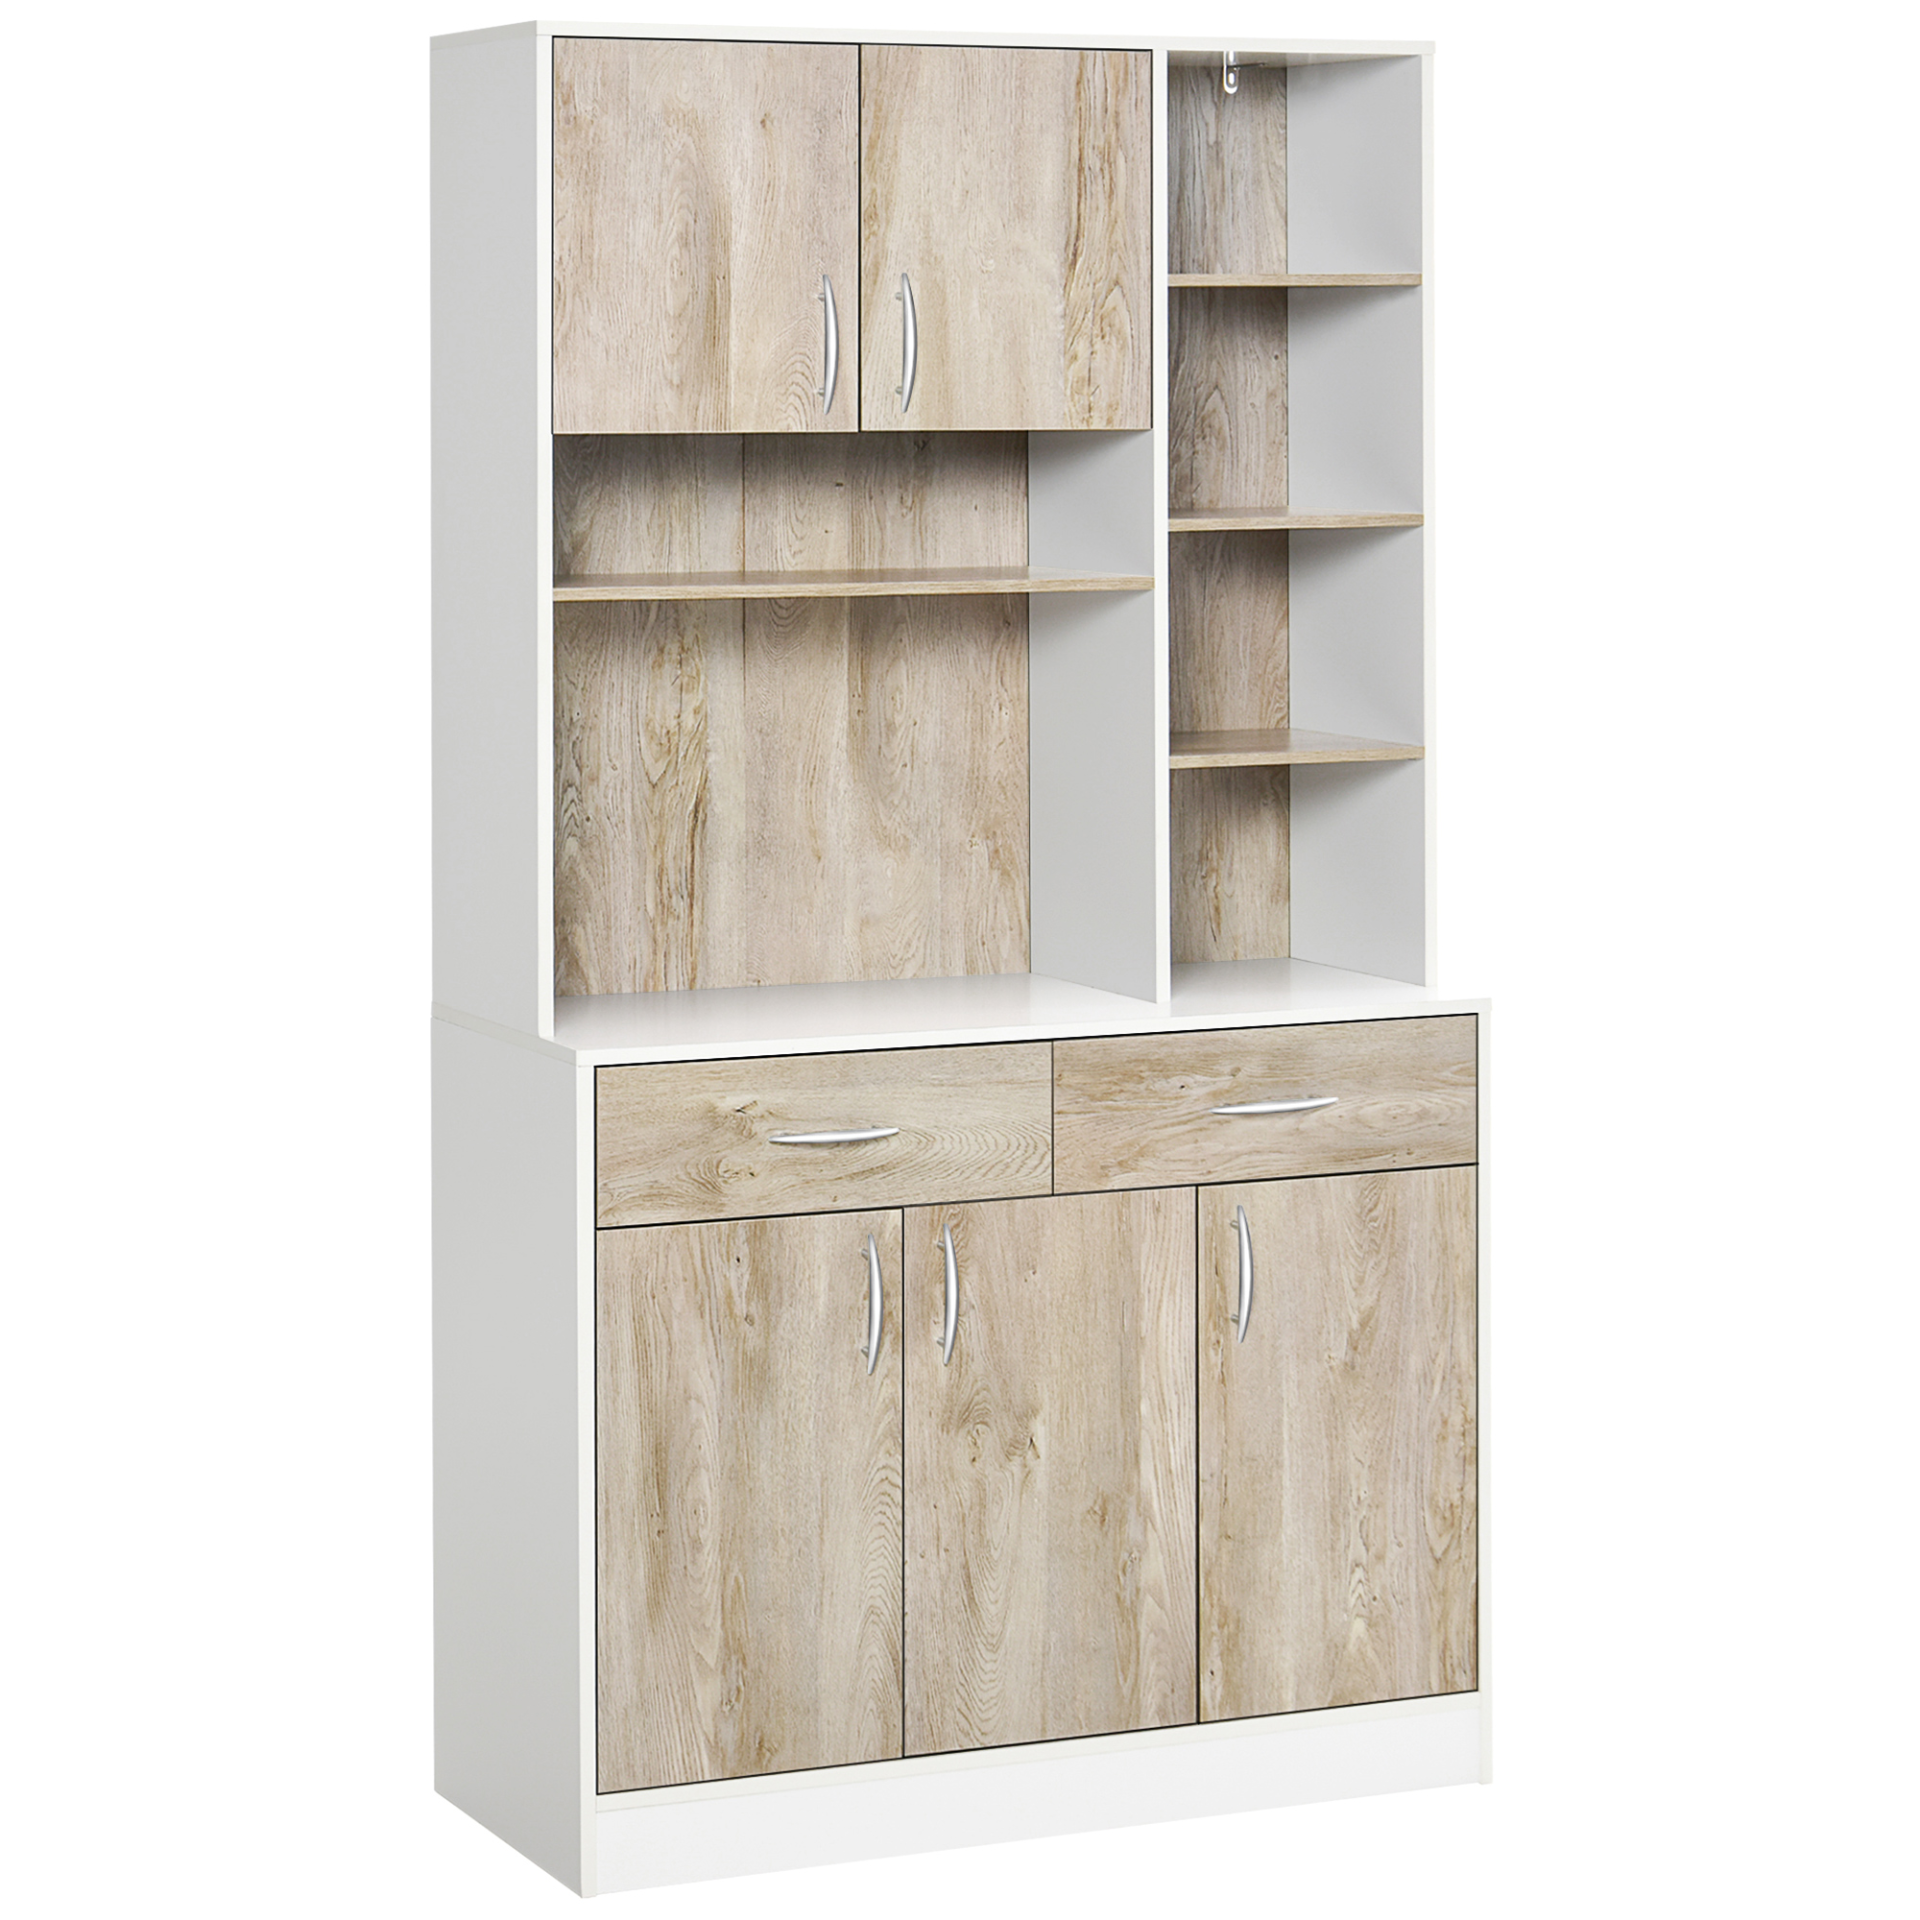 HOMCOM Kitchen Cupboard Sideboard Storage Cabinet Unit with Counter Top Adjusta